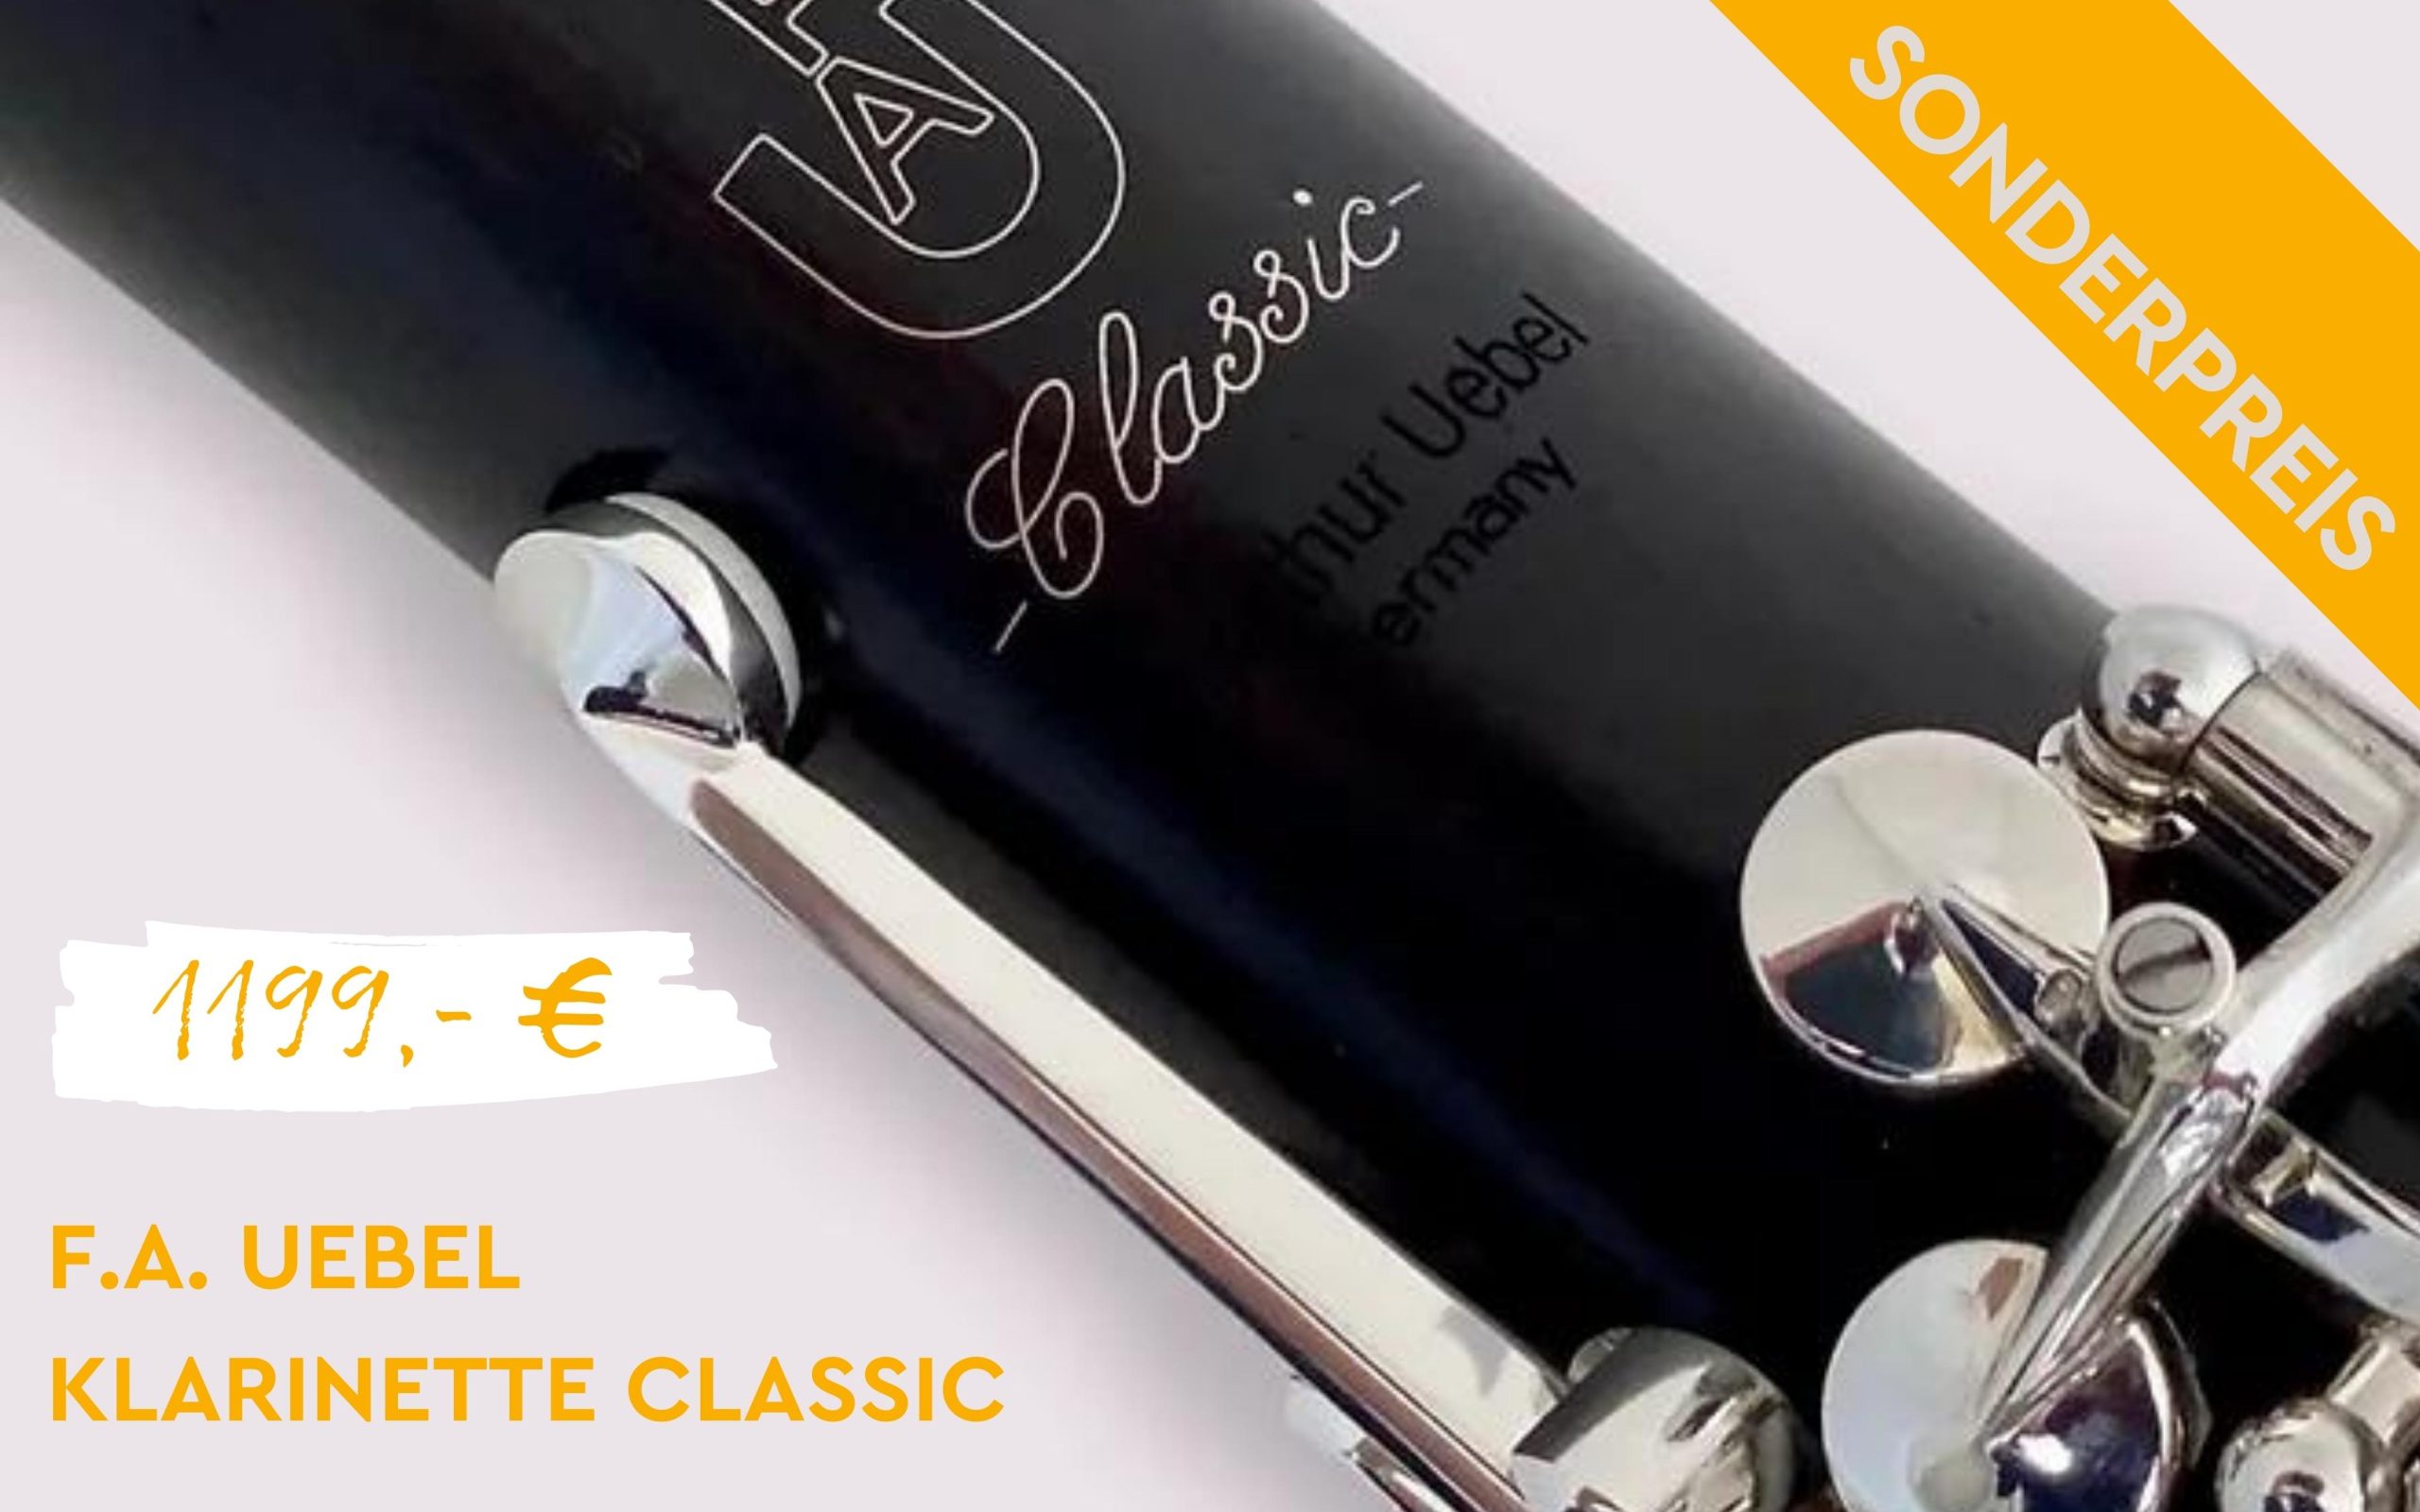 Uebel-Klarinette-Classic-Angebot